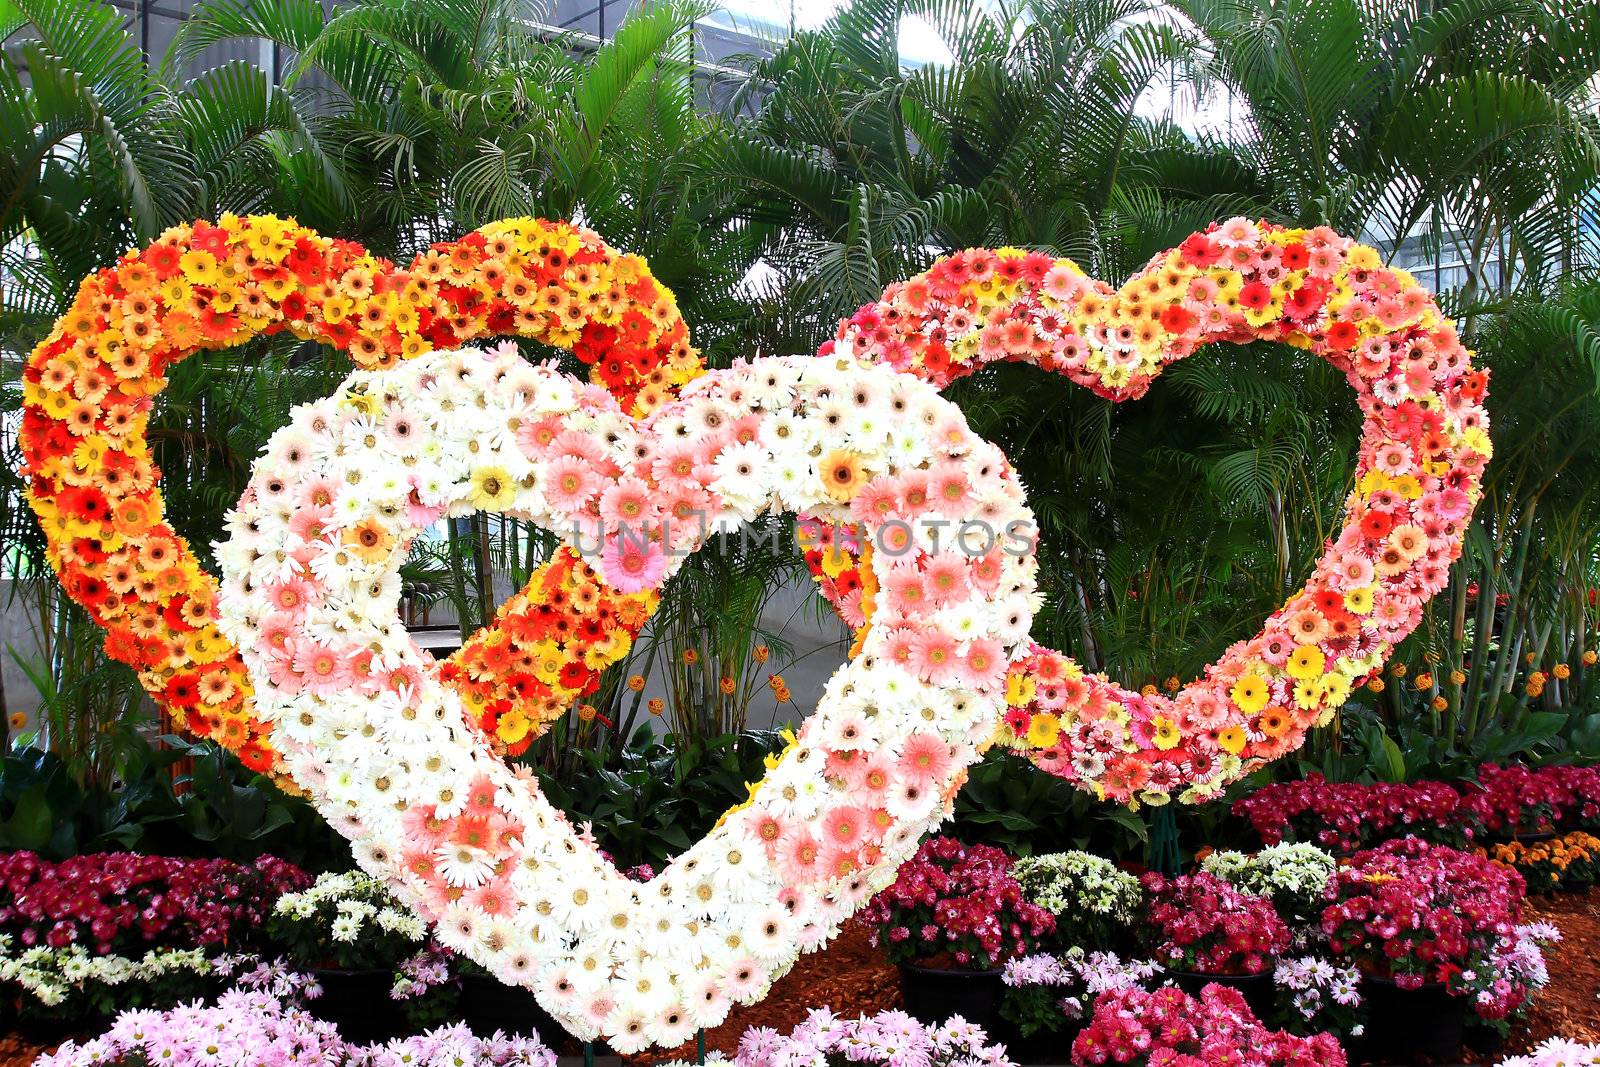 Three Heart made of flowers